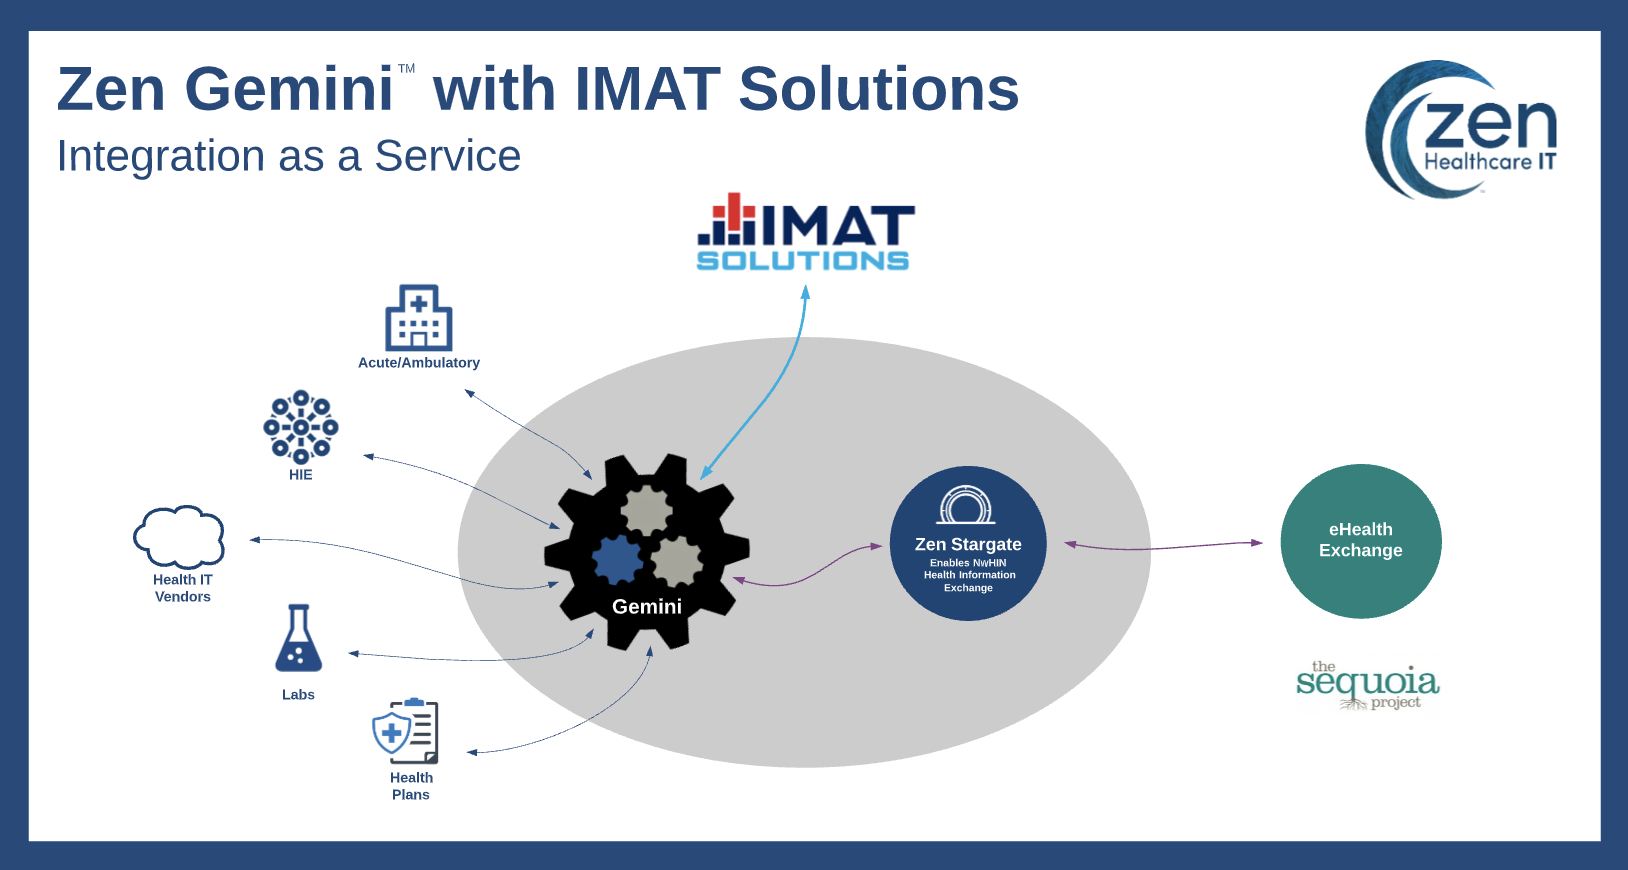 Zen Healthcare IT Gemini Integration as a Service Platform with IMAT Solutions